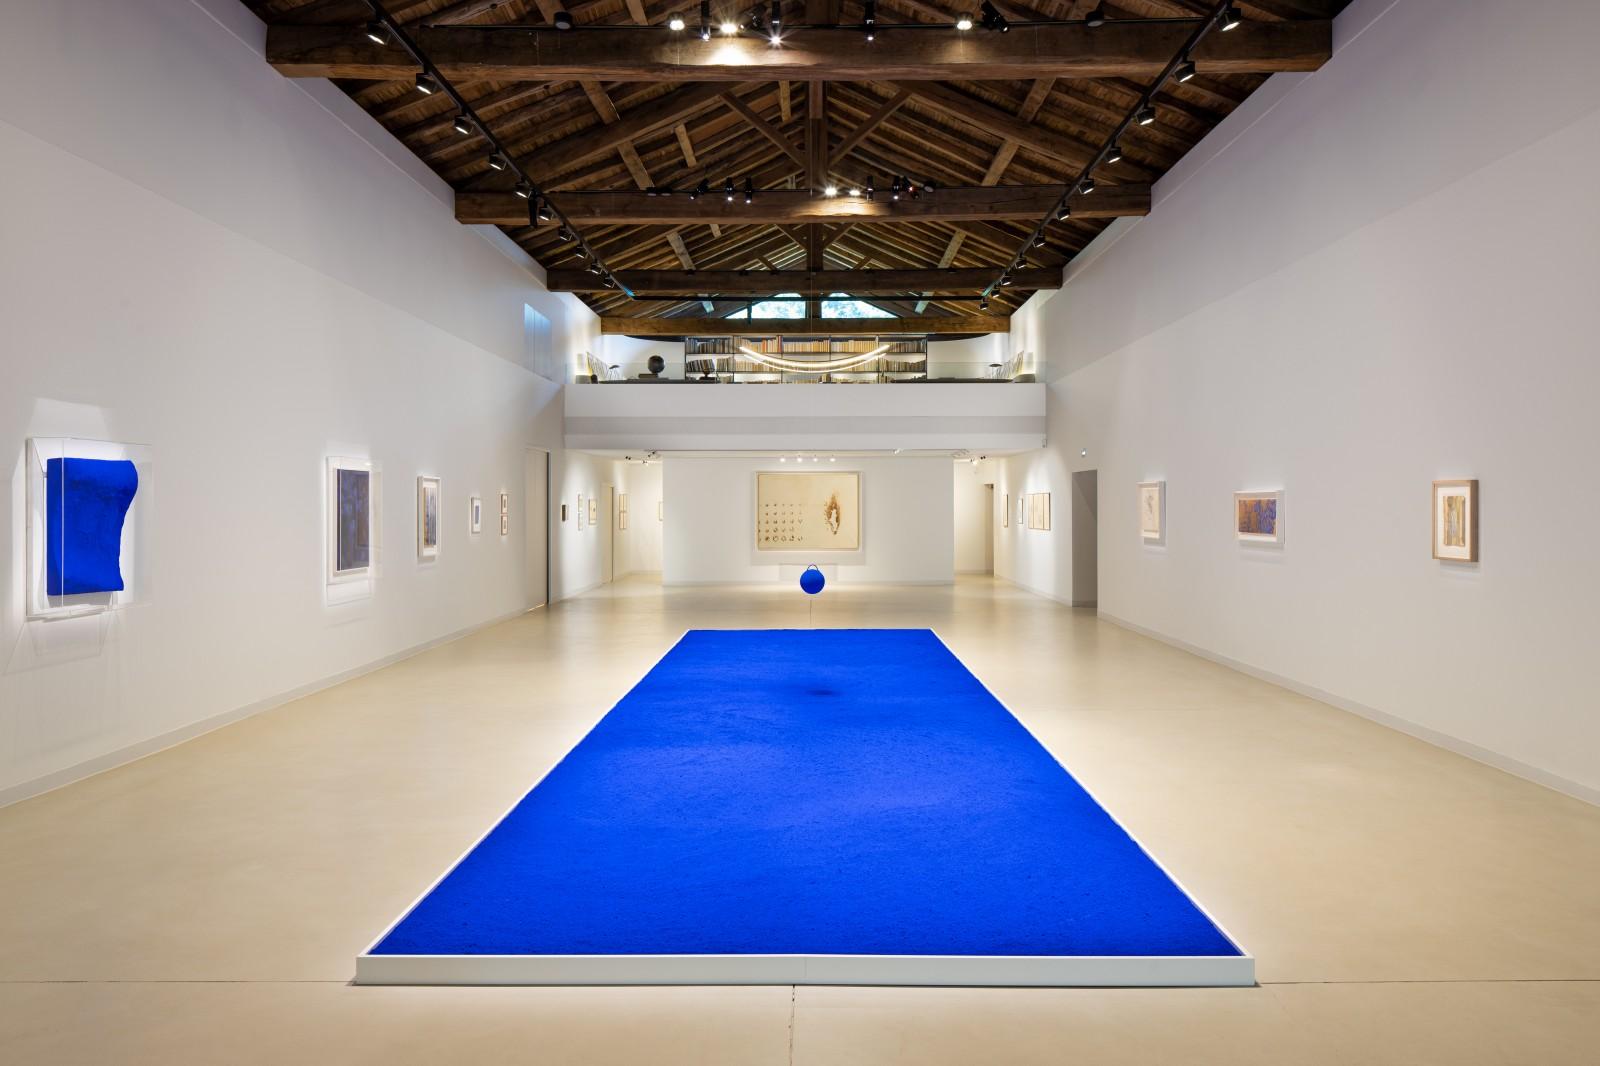 View of the exhibition "Elements and colors", Domaine des Étangs, 2020